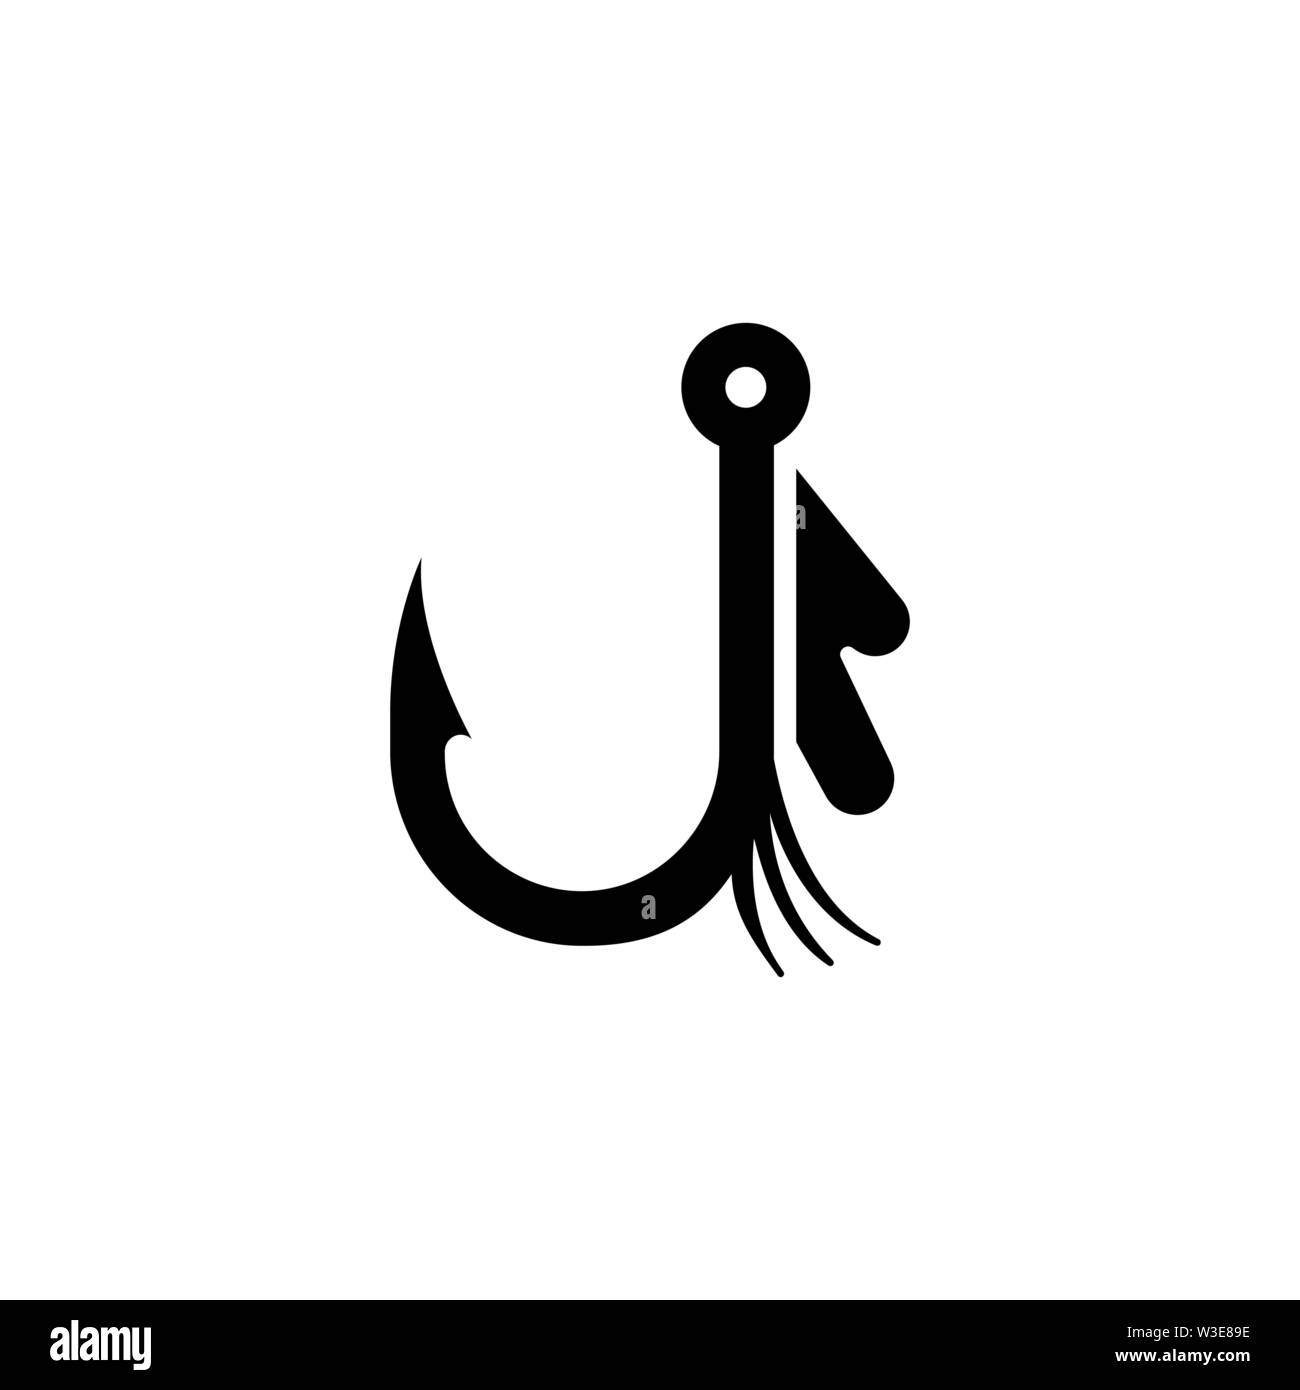 https://c8.alamy.com/comp/W3E89E/bait-fishhook-fishing-hook-flat-vector-icon-illustration-simple-black-symbol-on-white-background-bait-fishhook-fishing-hook-sign-design-template-W3E89E.jpg